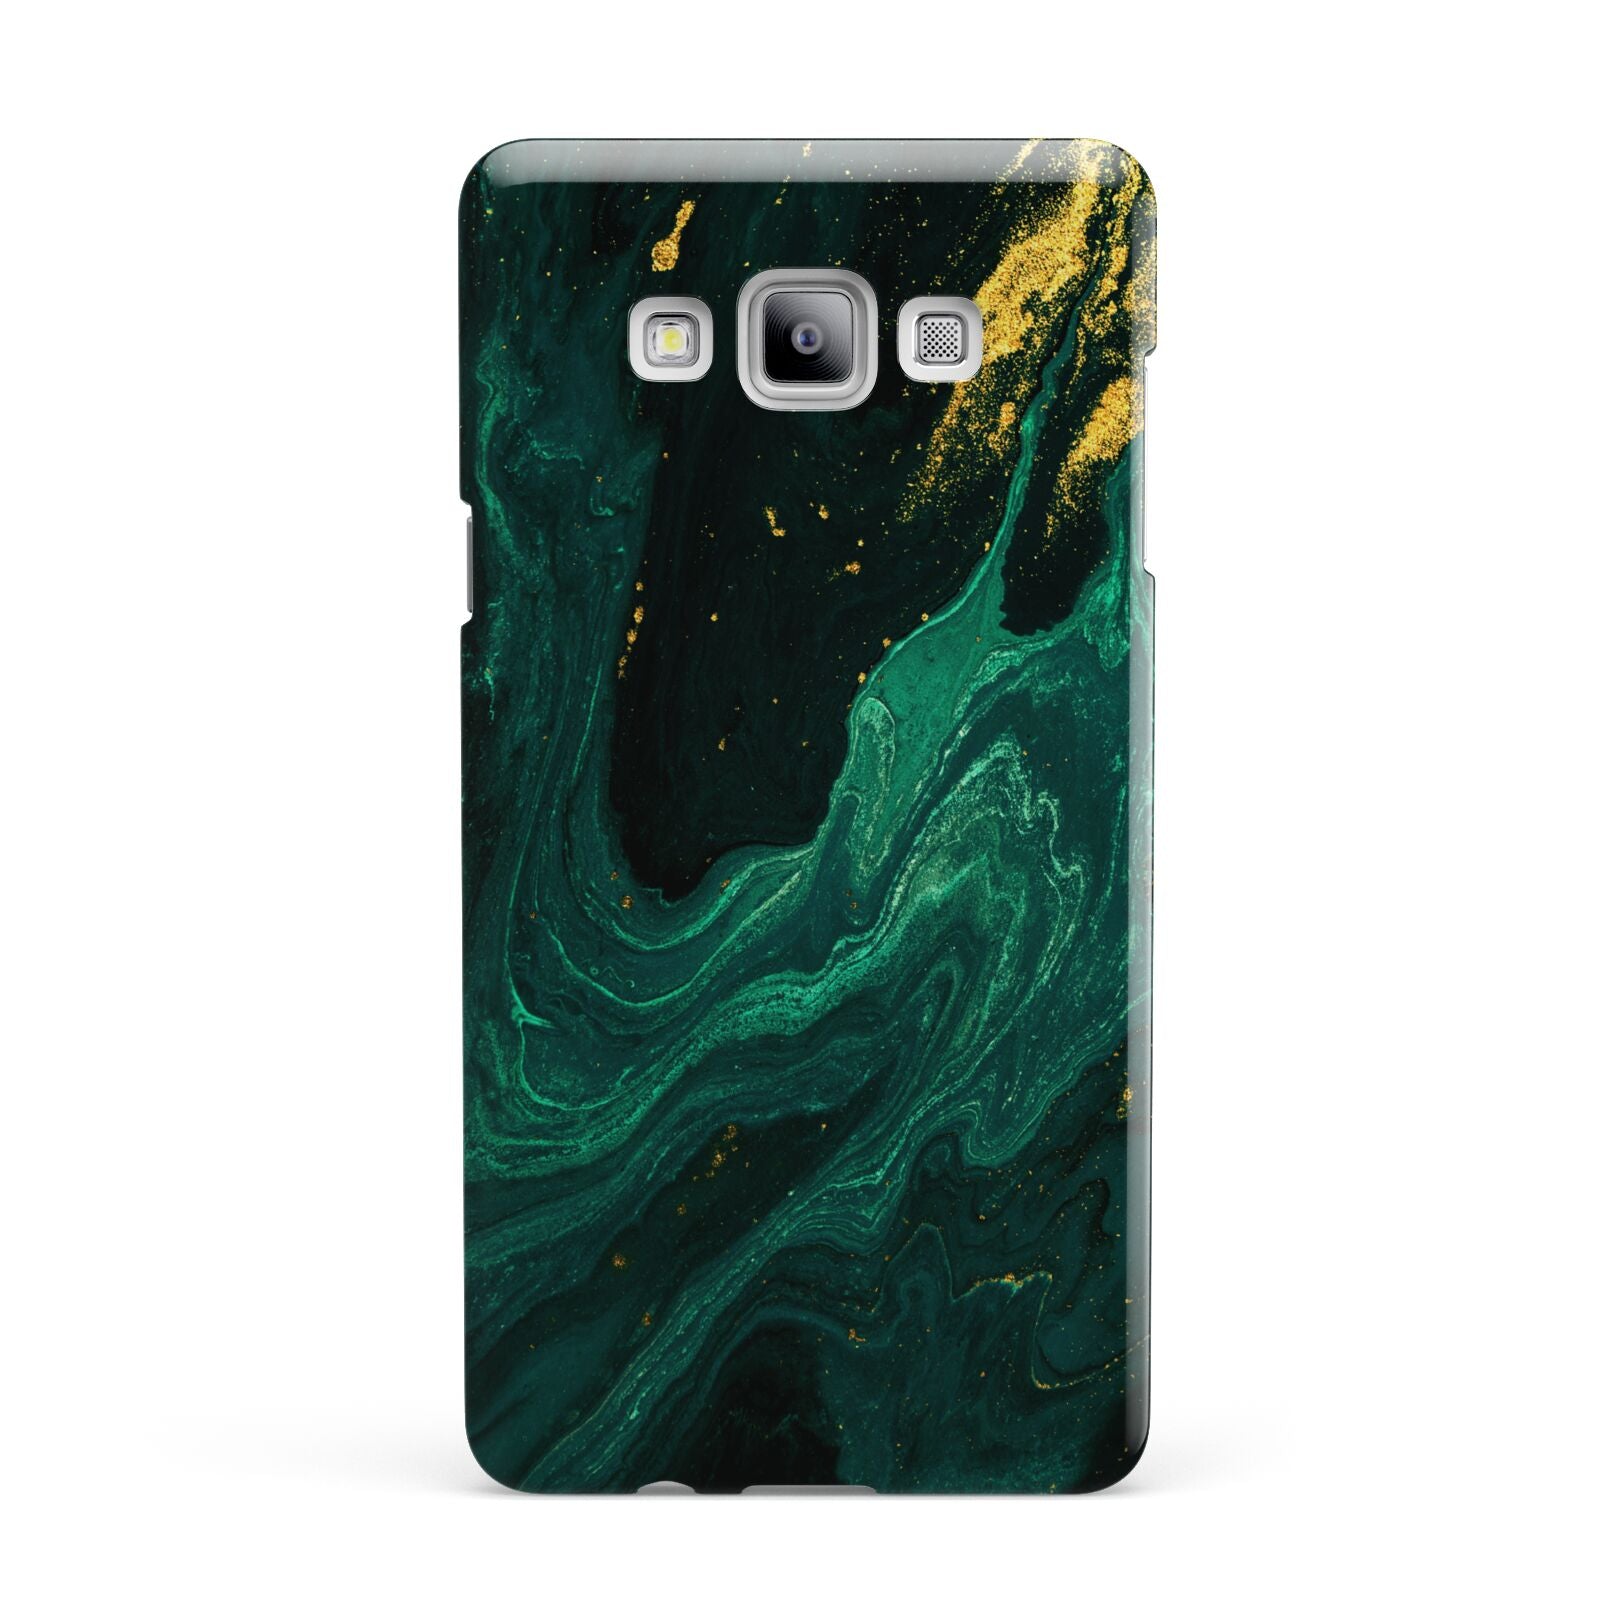 Emerald Green Samsung Galaxy A7 2015 Case